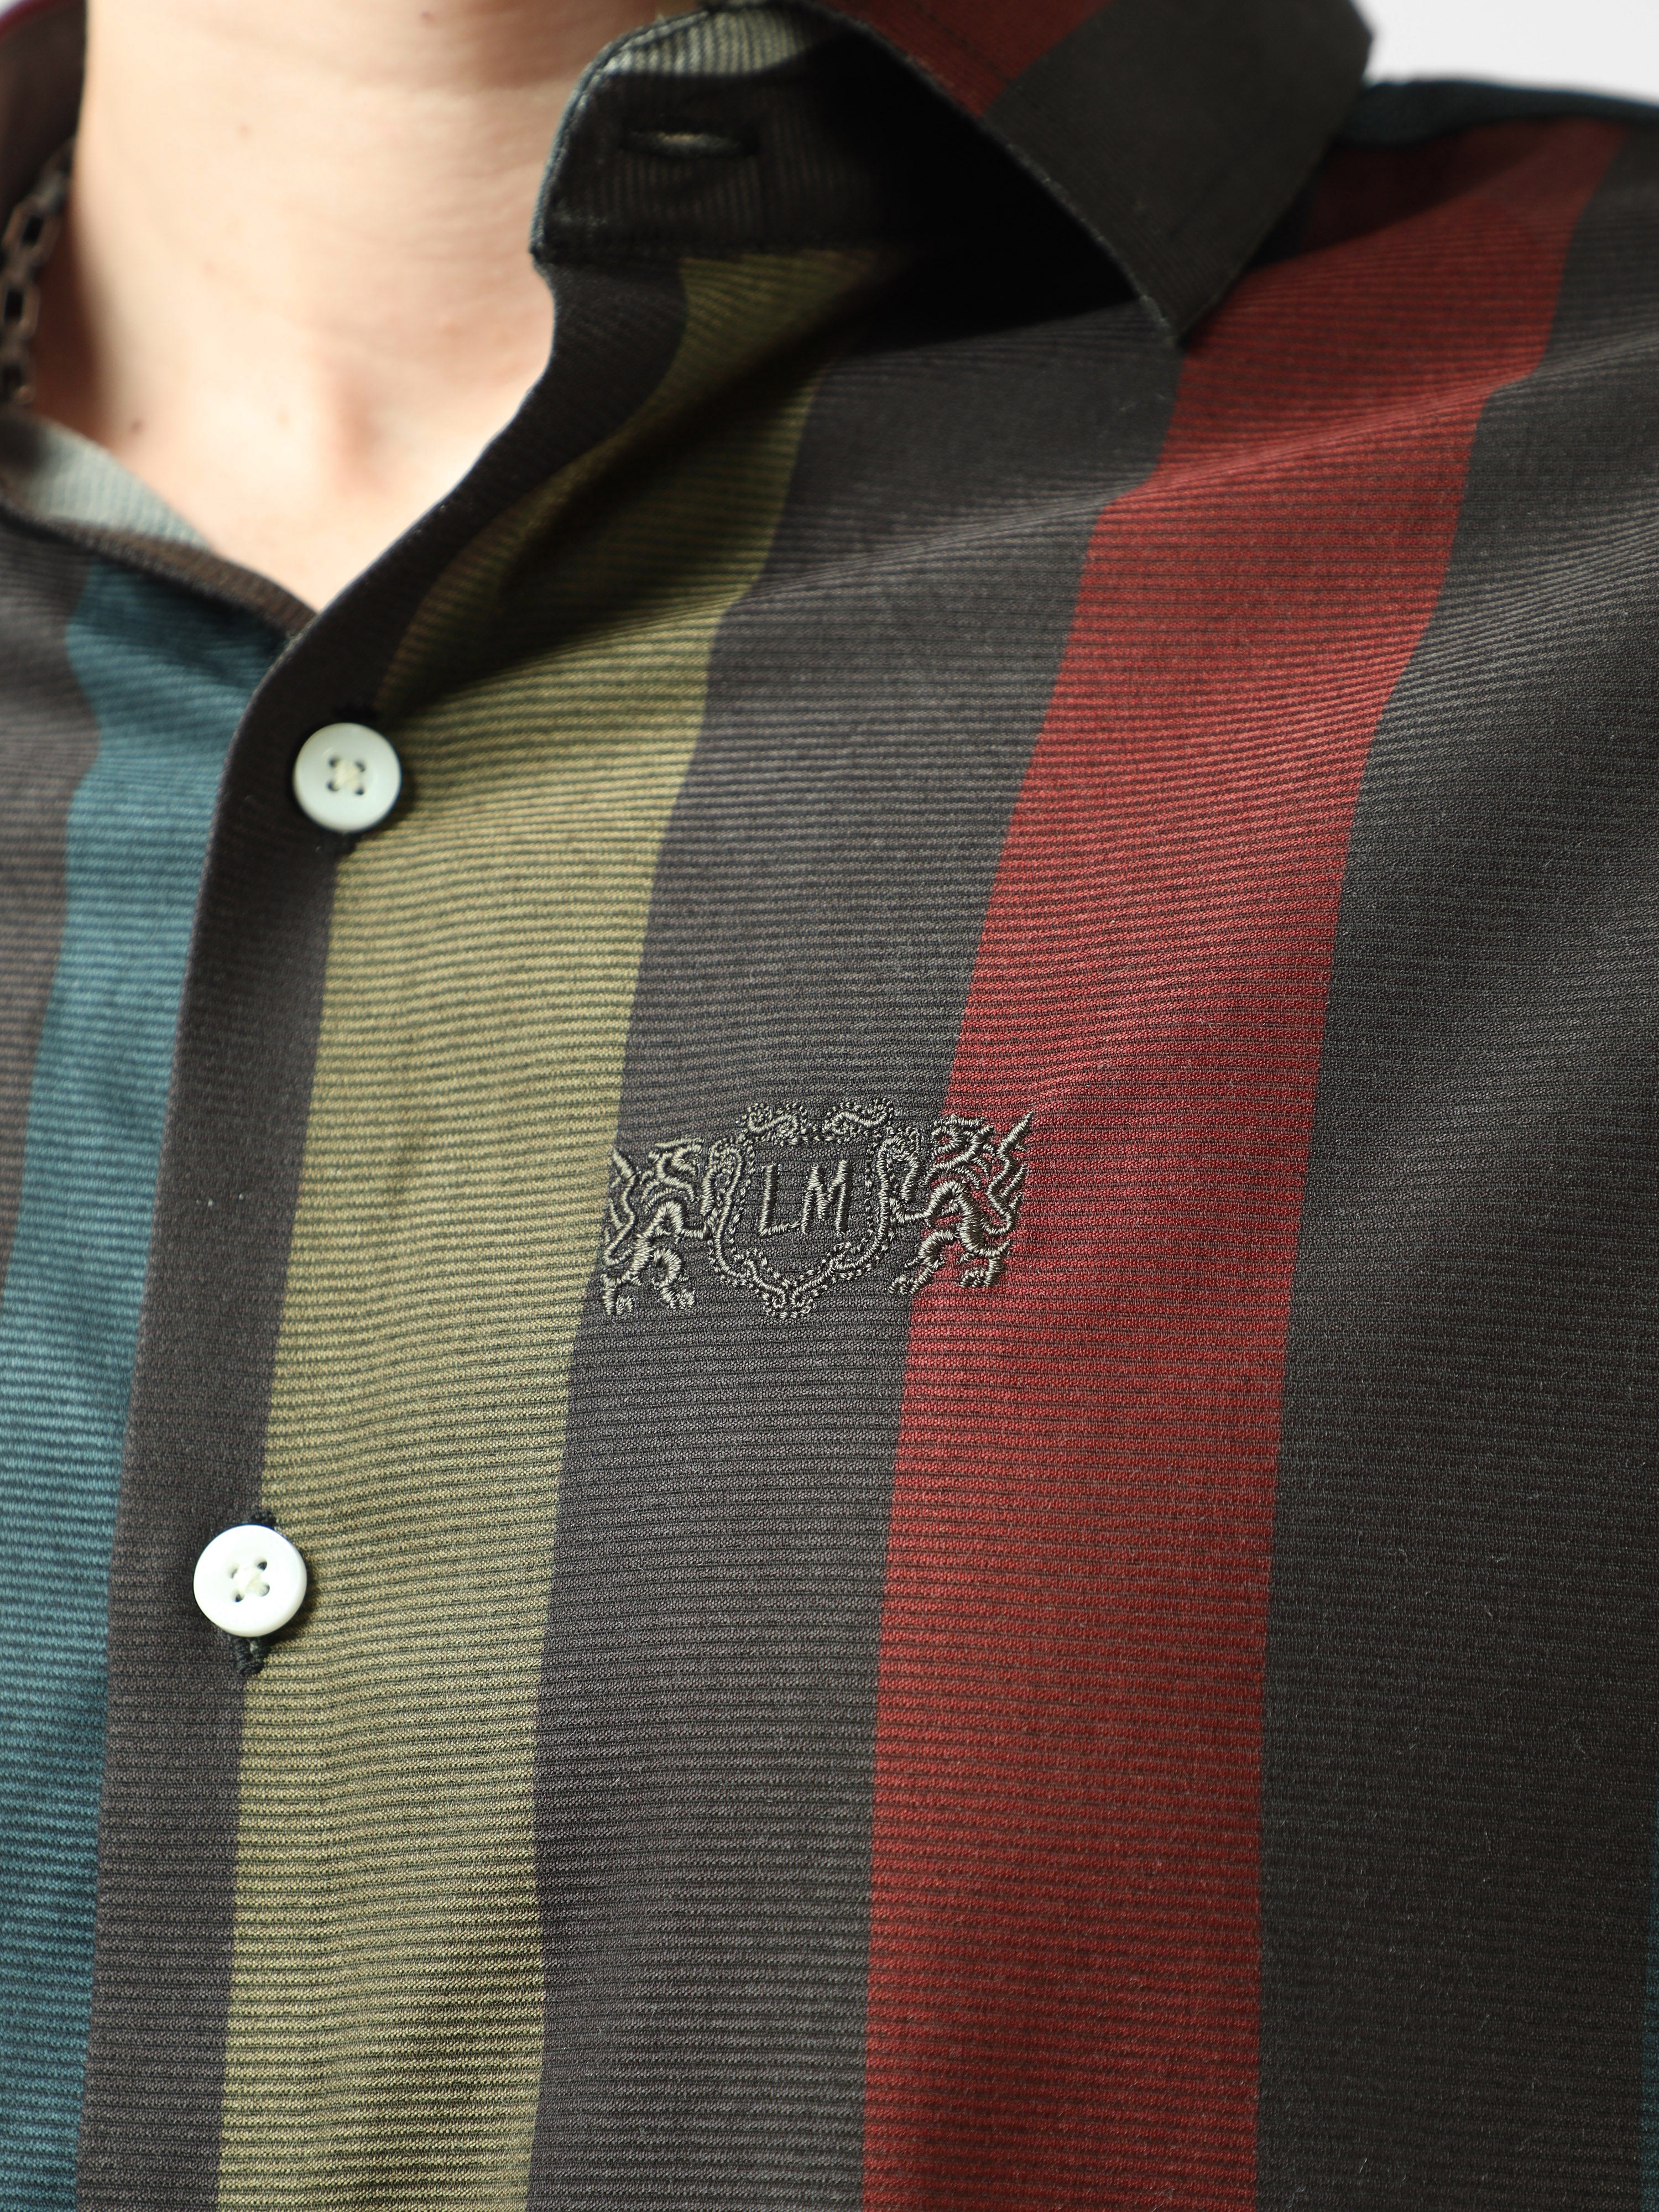 Buy Trendy Corduroy Lycra Multicolor Striped Shirt OnlineRs. 1359.00